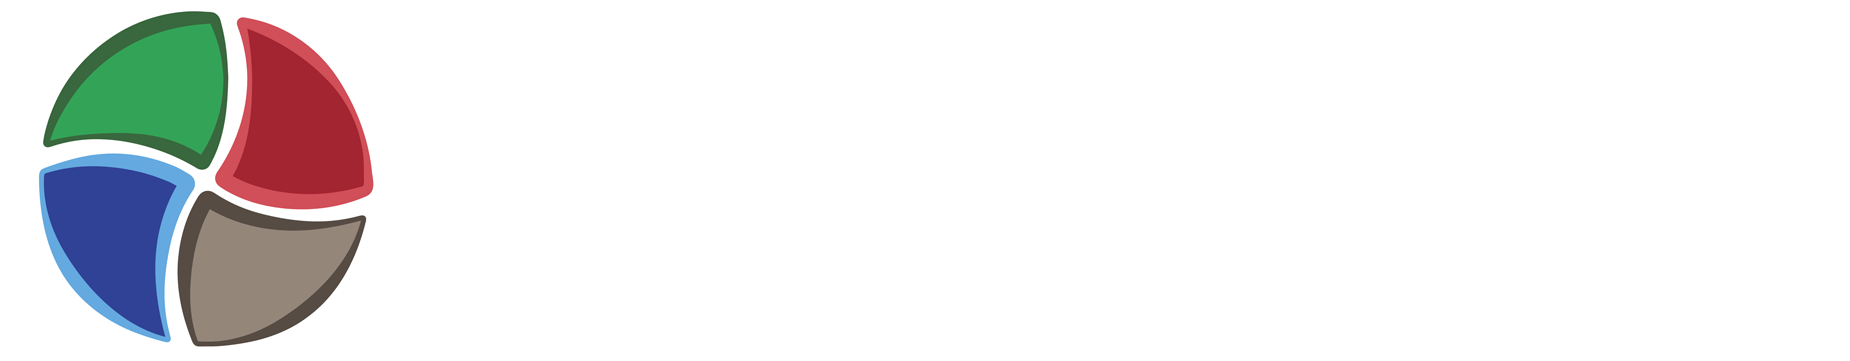 Aquaculture Information Exchange Logo